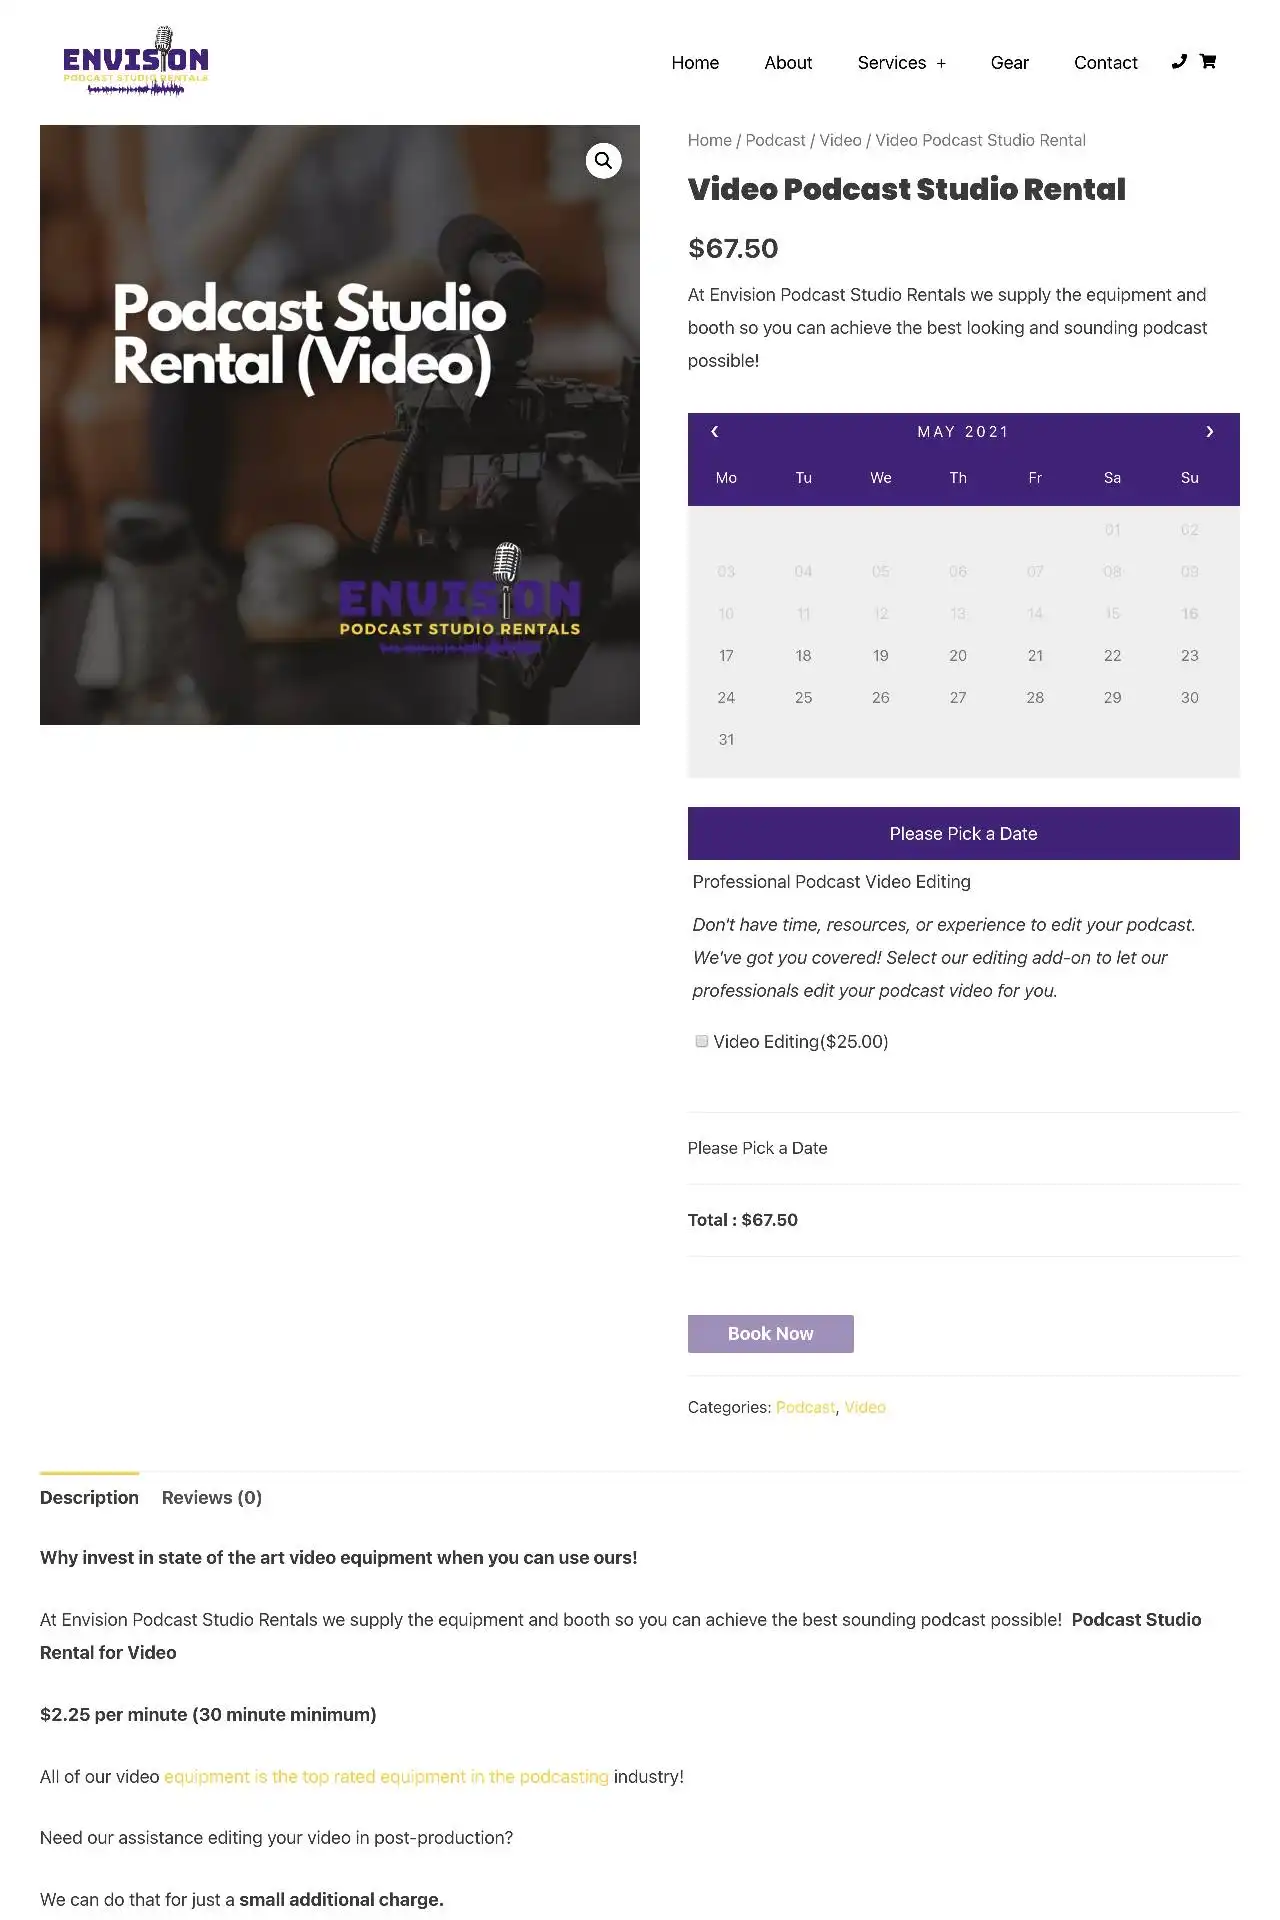 https envisionpodcaststudio.com product video podcast studio rental